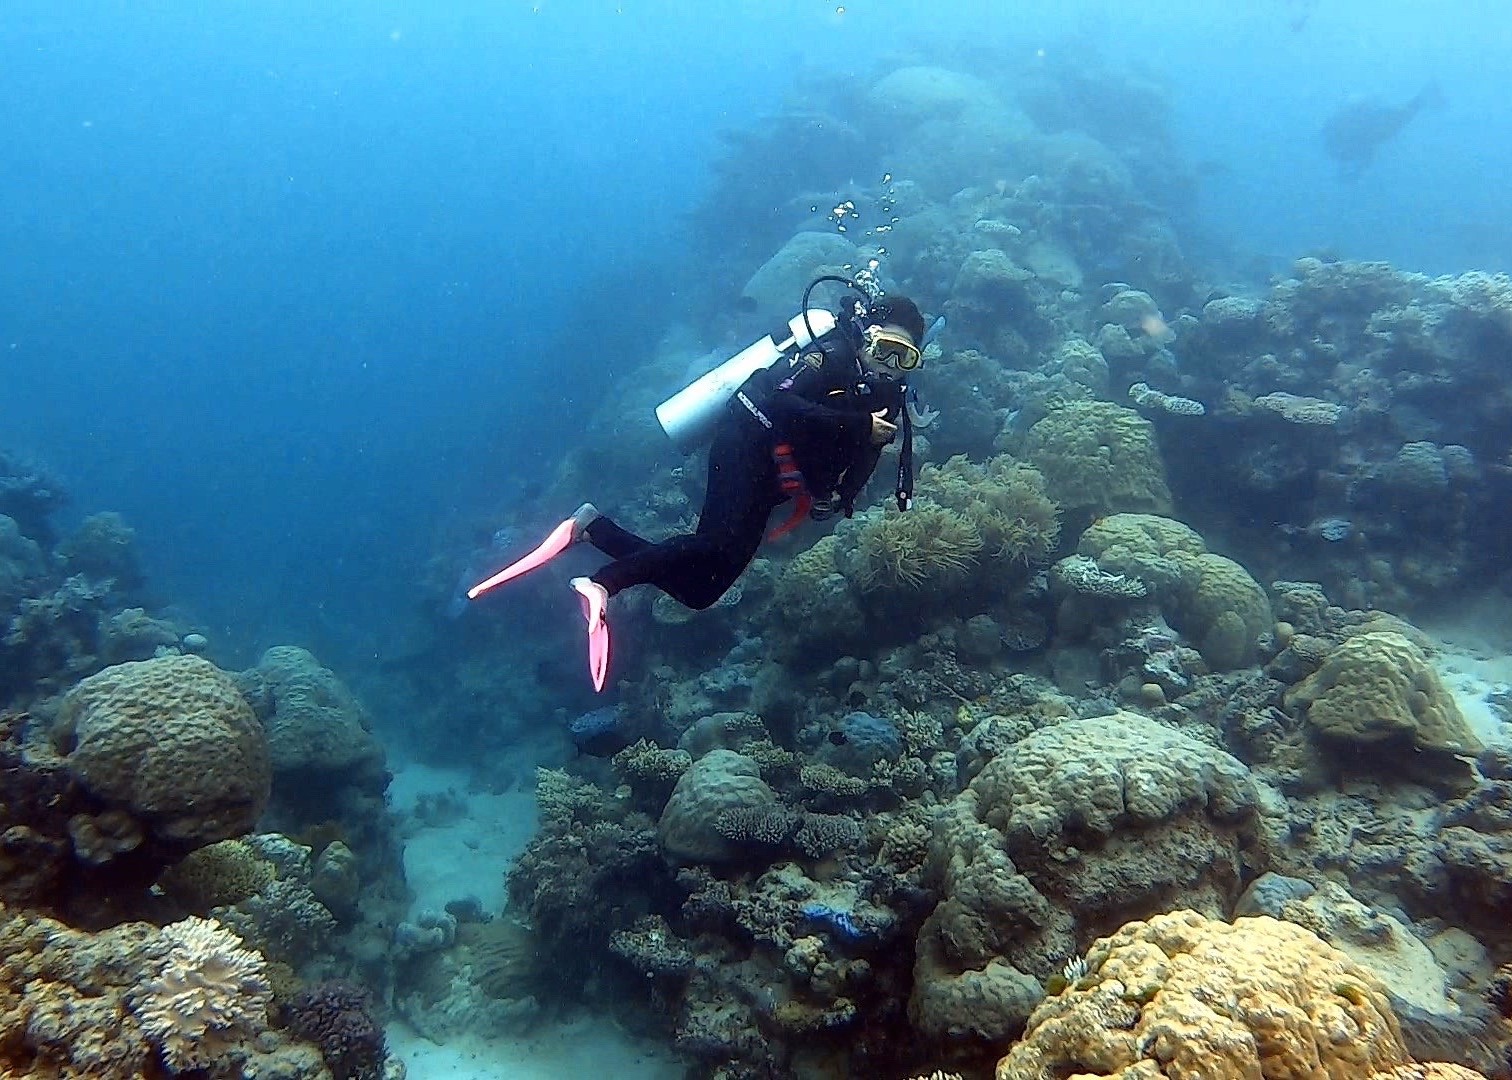 Ynes Sanchez Calderon diving on the Great Barrier Reef. 